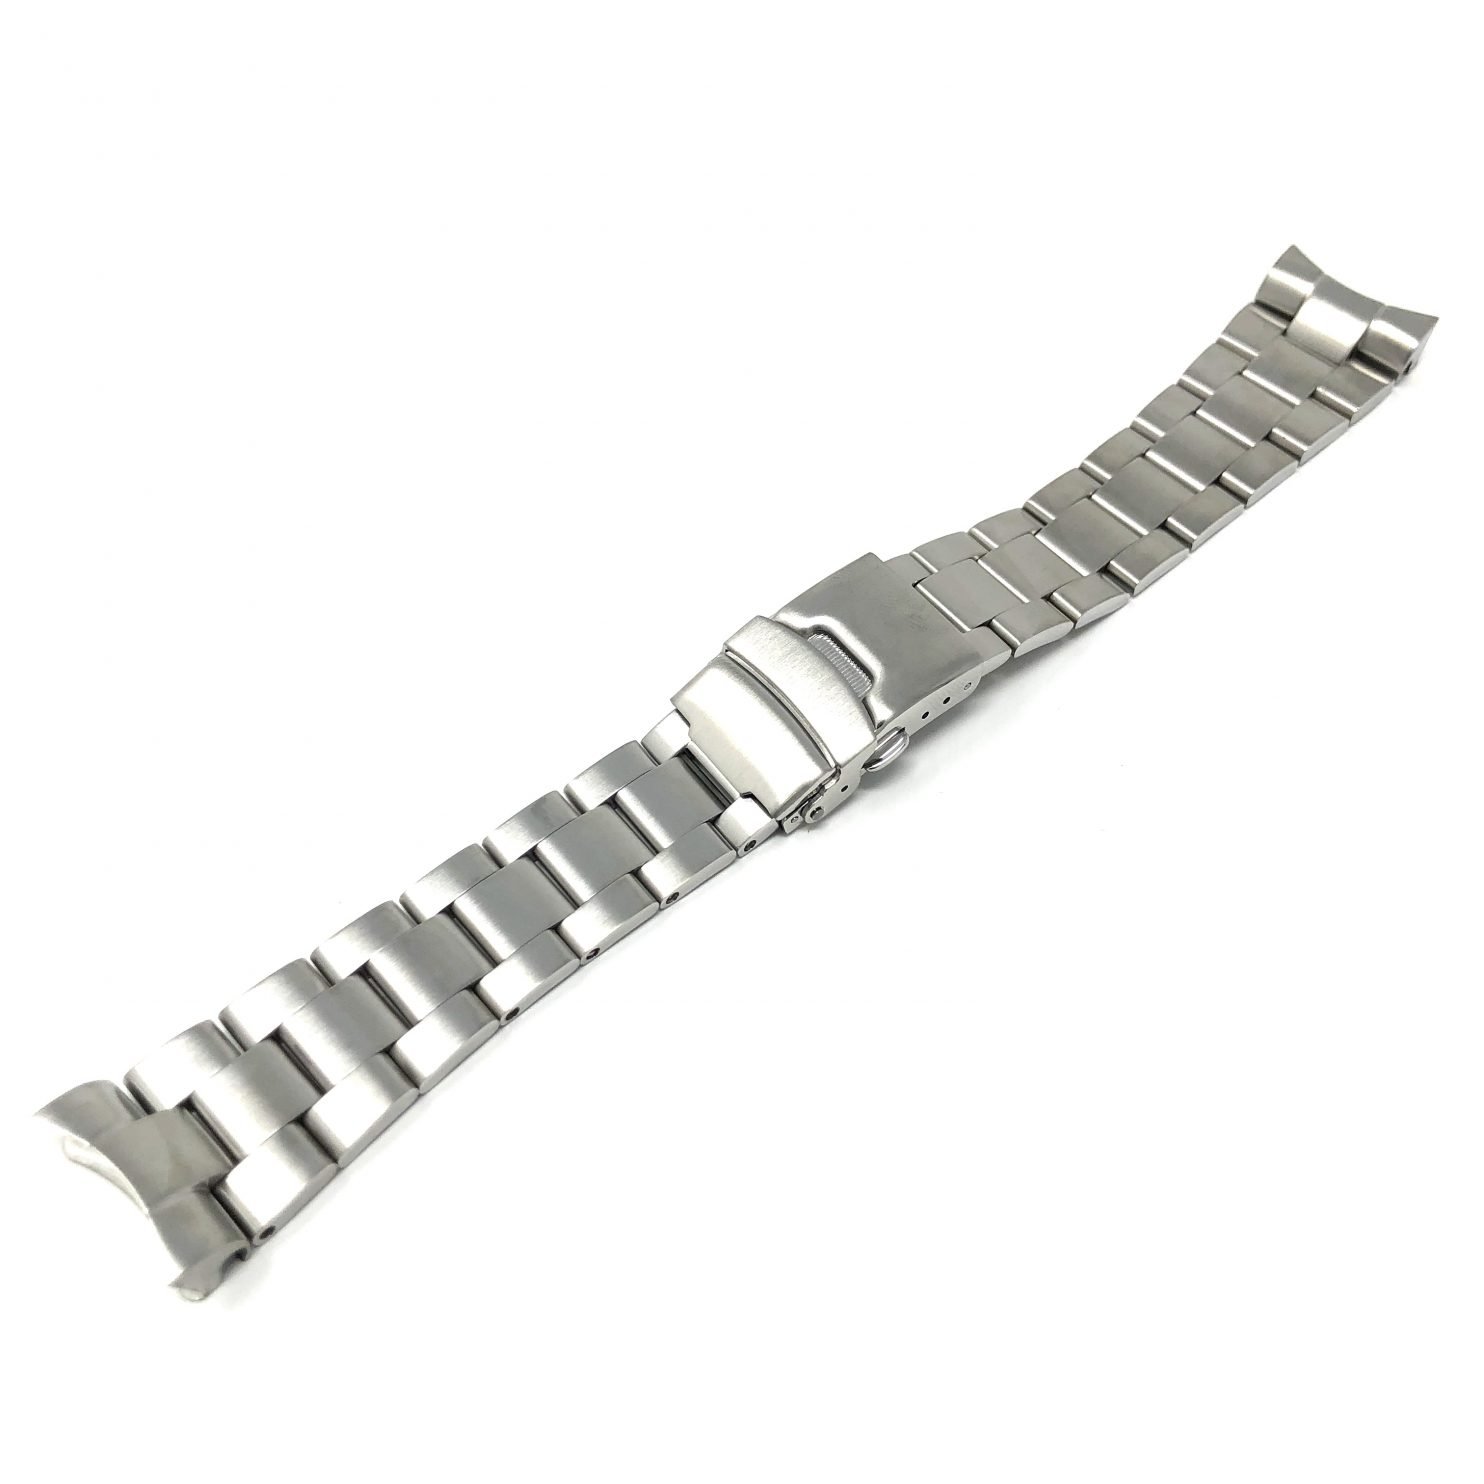 Seiko Mod Parts: Bracelet Designs You Should Check Out Pt. 1 - Crystaltimes  USA Seiko Modding